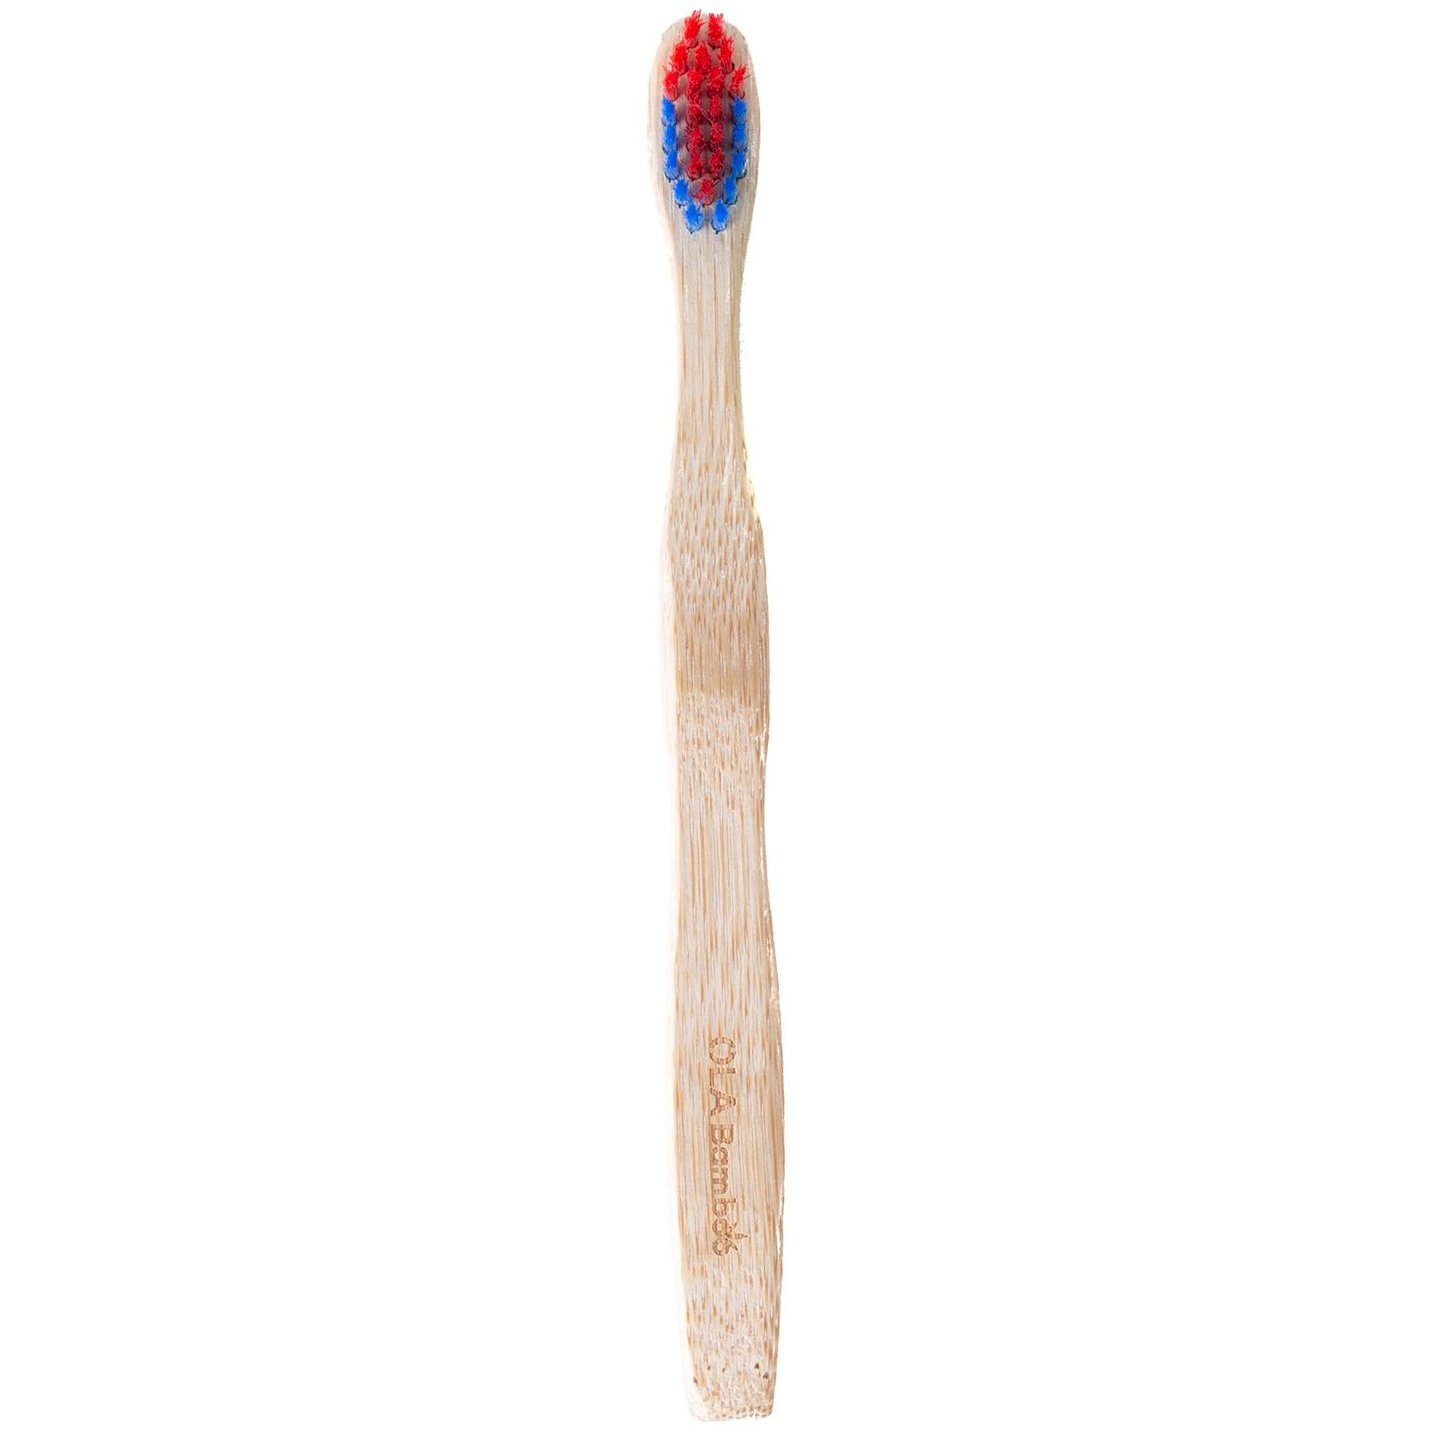 OLABamboo Kids Toothbrush Soft Μαλακή Παιδική Οδοντόβουρτσα από 100% Μπαμπού 1 Τεμάχιο – Κόκκινο / Μπλε